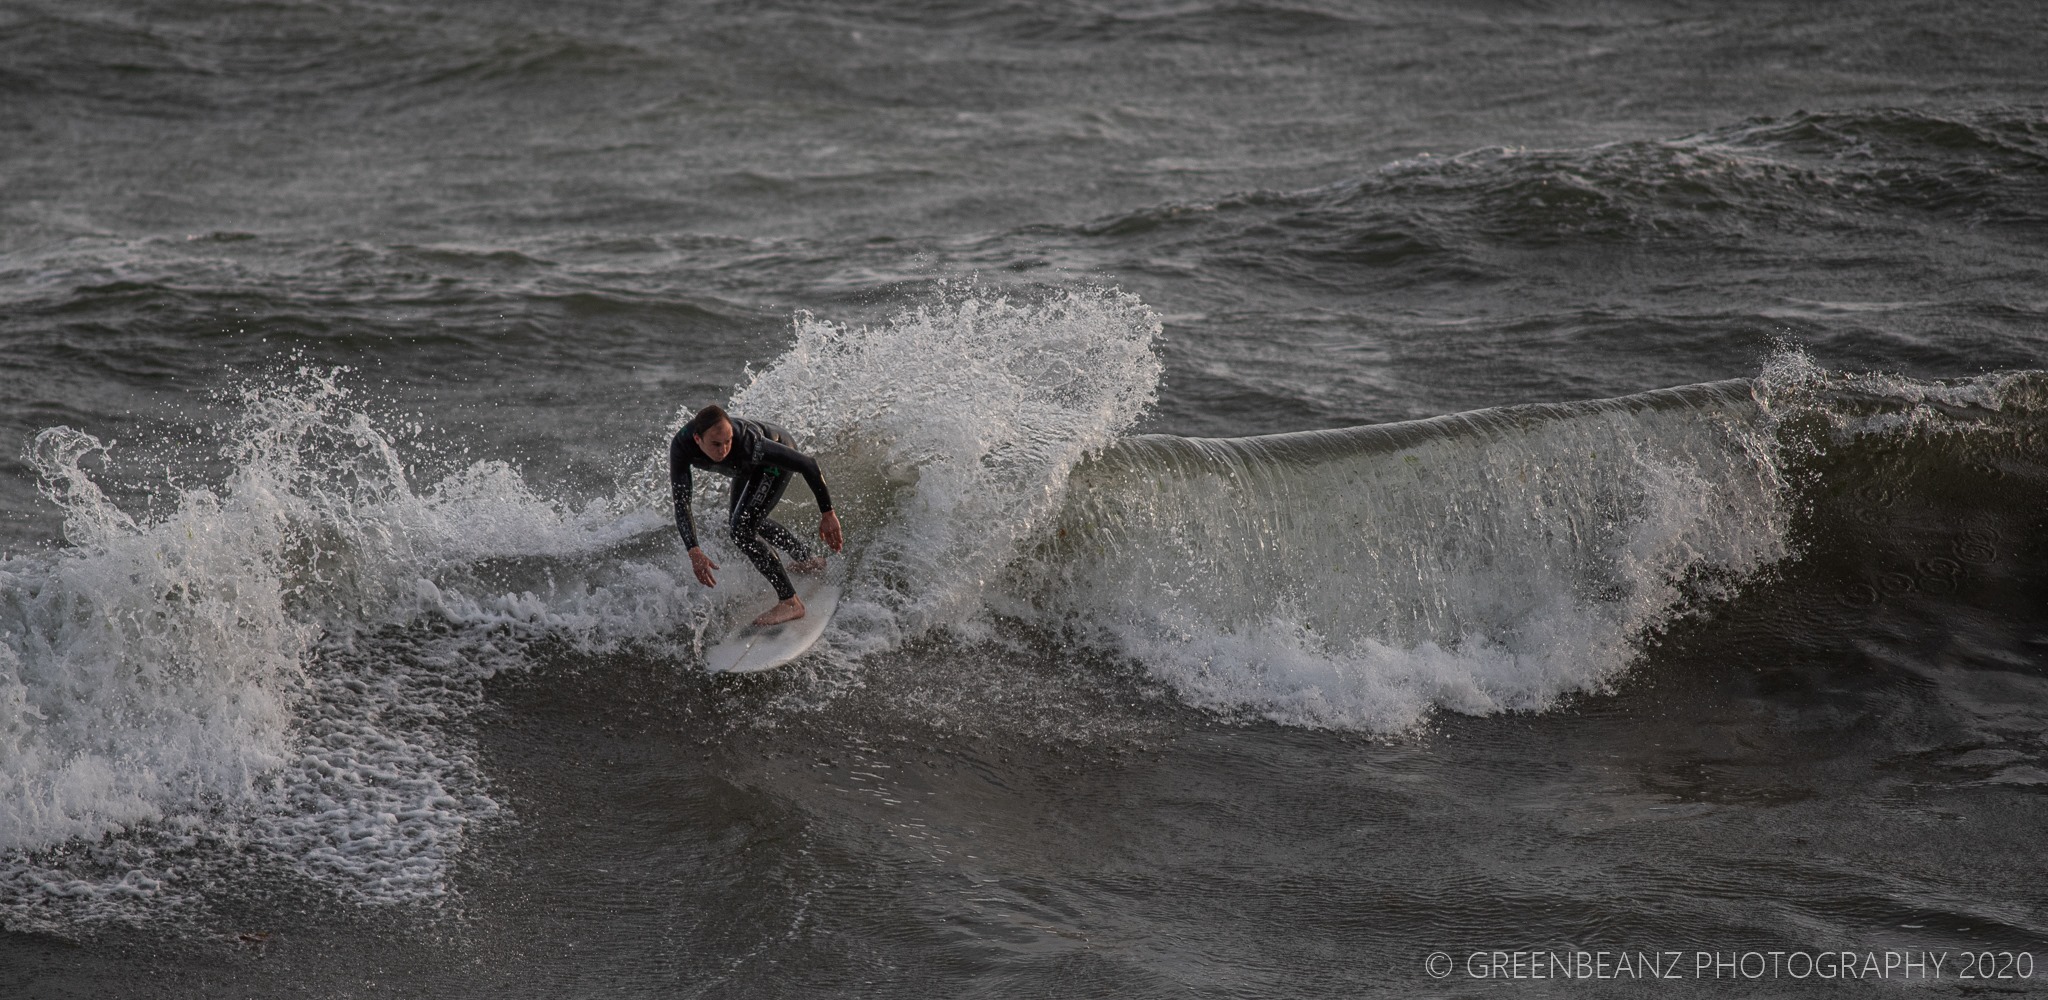 Surfer at Wembury Beach in May 2020